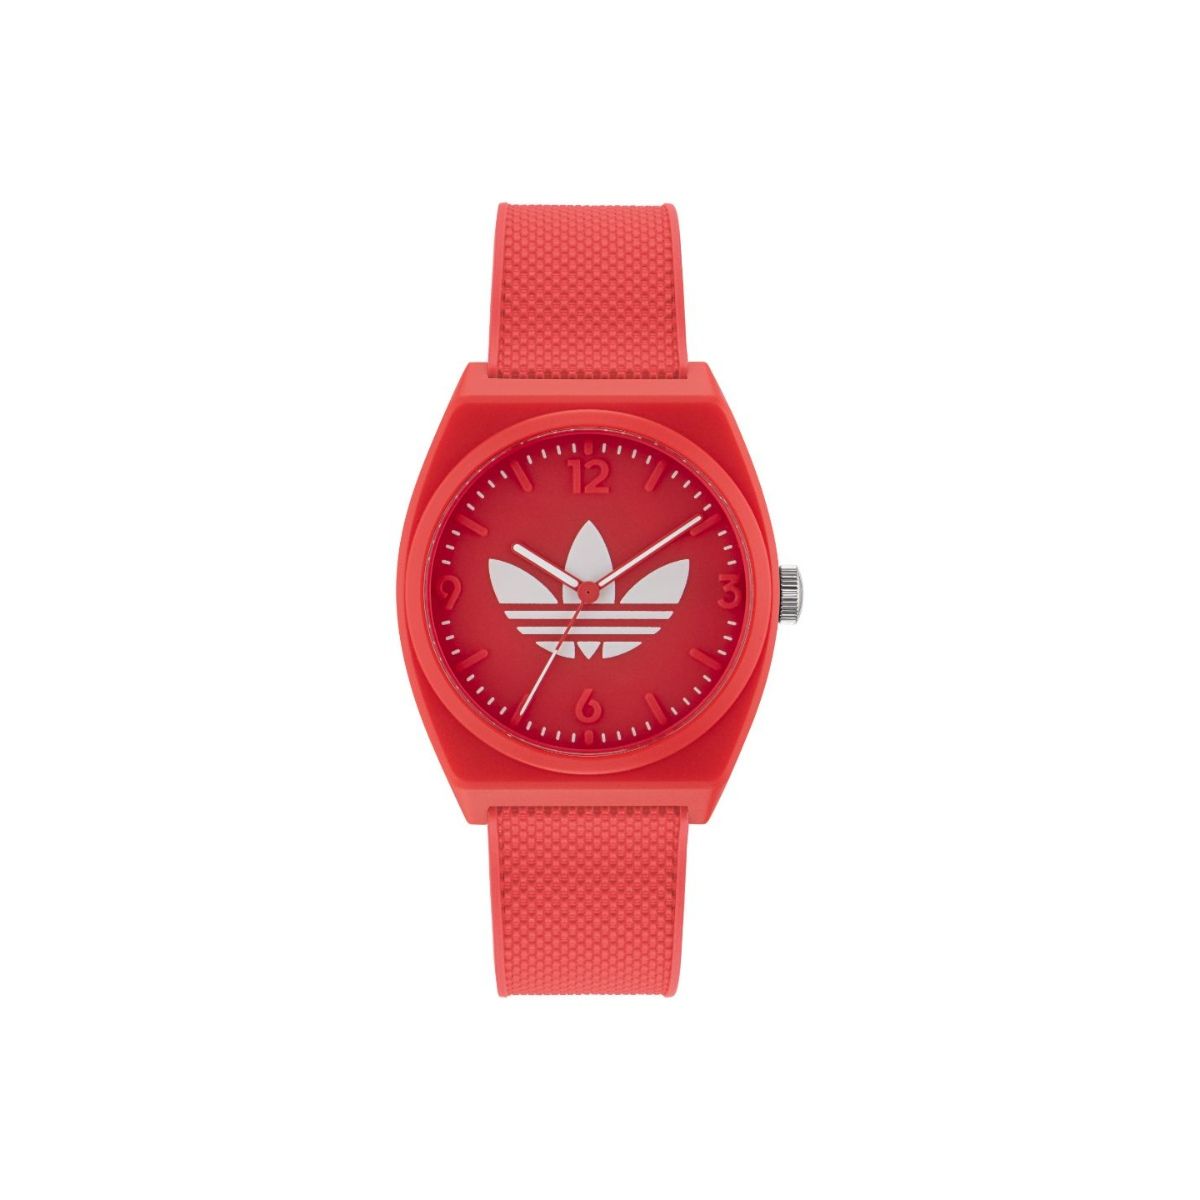 1155 Analog Digital Wrist watch For Men, Boys Red